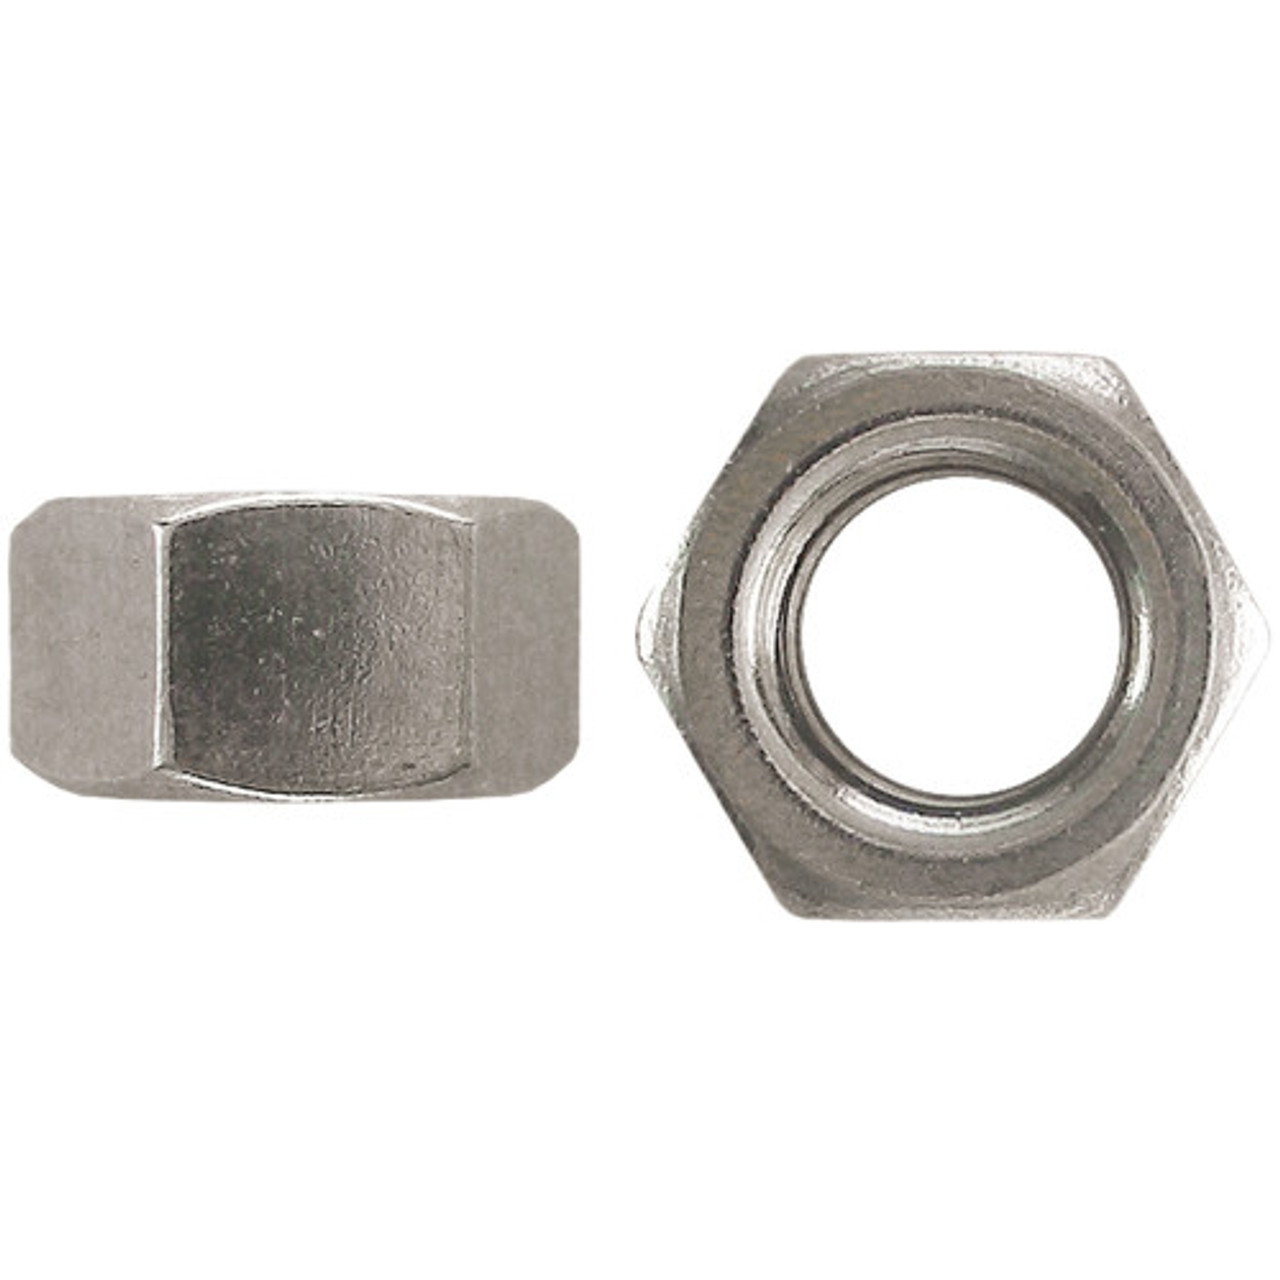 1/4"-20 18.8 UNC Stainless Steel Machine Screw Hex Nut 100 Pc.   5035-014